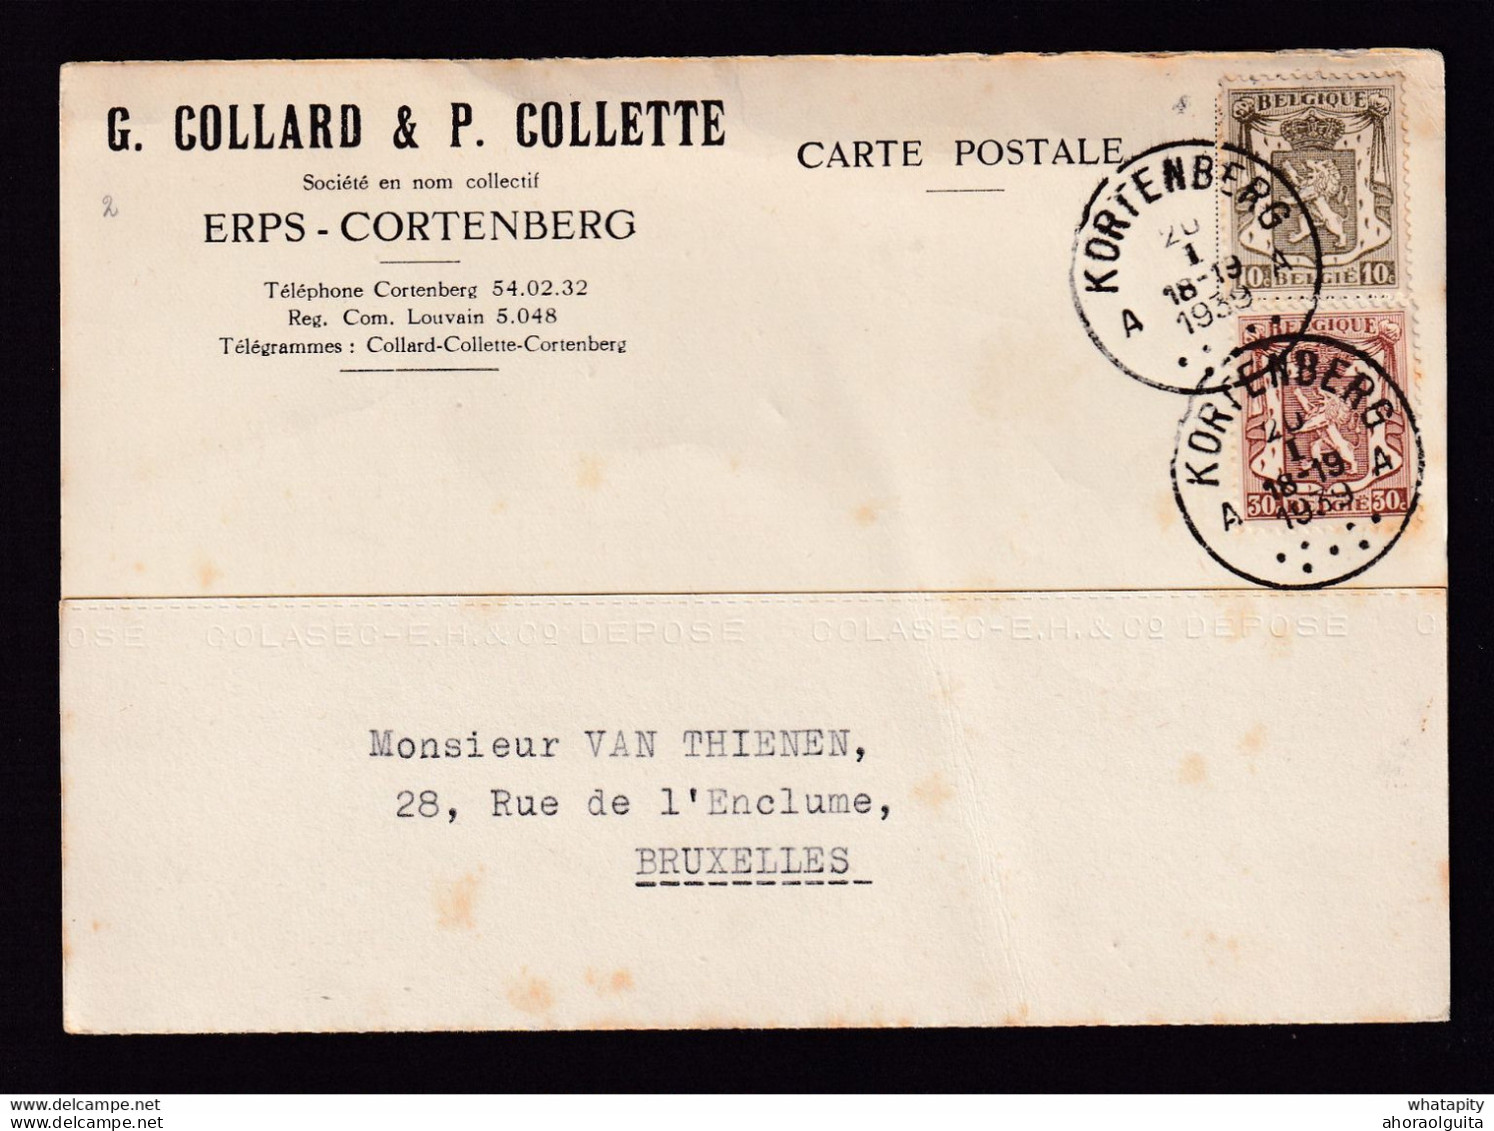 DDBB 008 - Carte Privée TP Petit Sceau KORTENBERG 1939 - Entete Collard § Collette à ERPS-CORTENBERG - 1935-1949 Small Seal Of The State